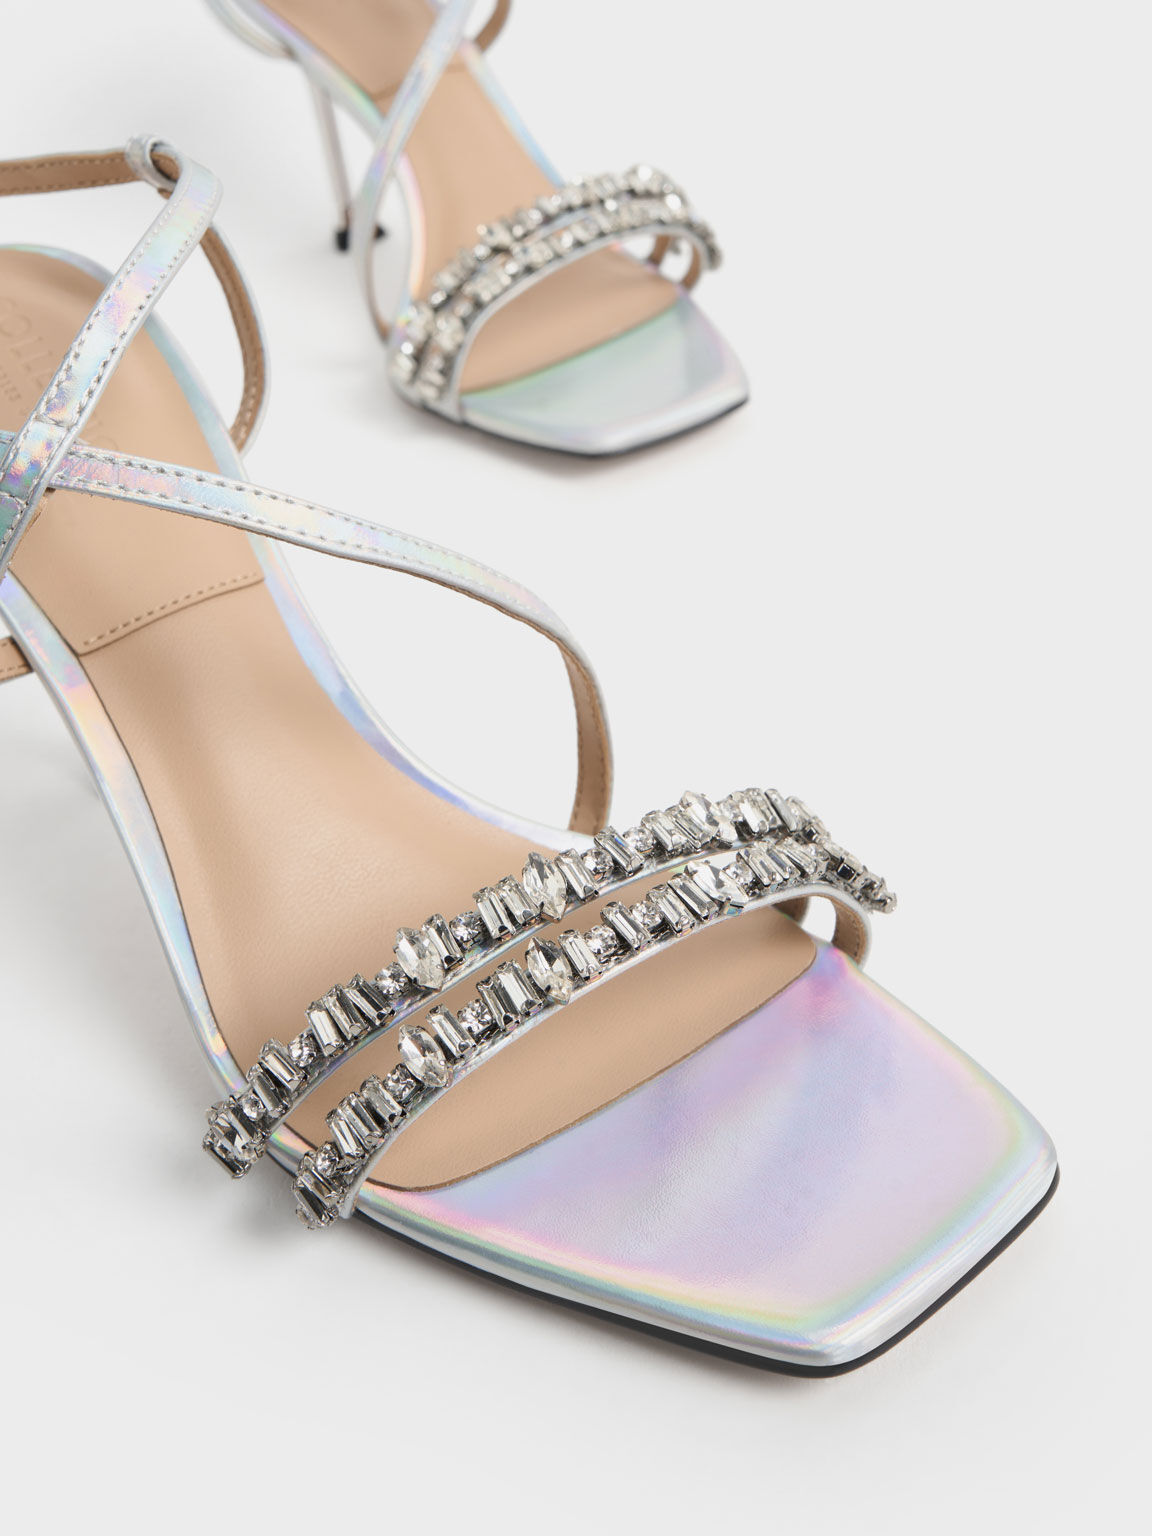 Giày sandals cao gót đính đá Holographic Leather Gem-Embellished, Nhiều màu, hi-res